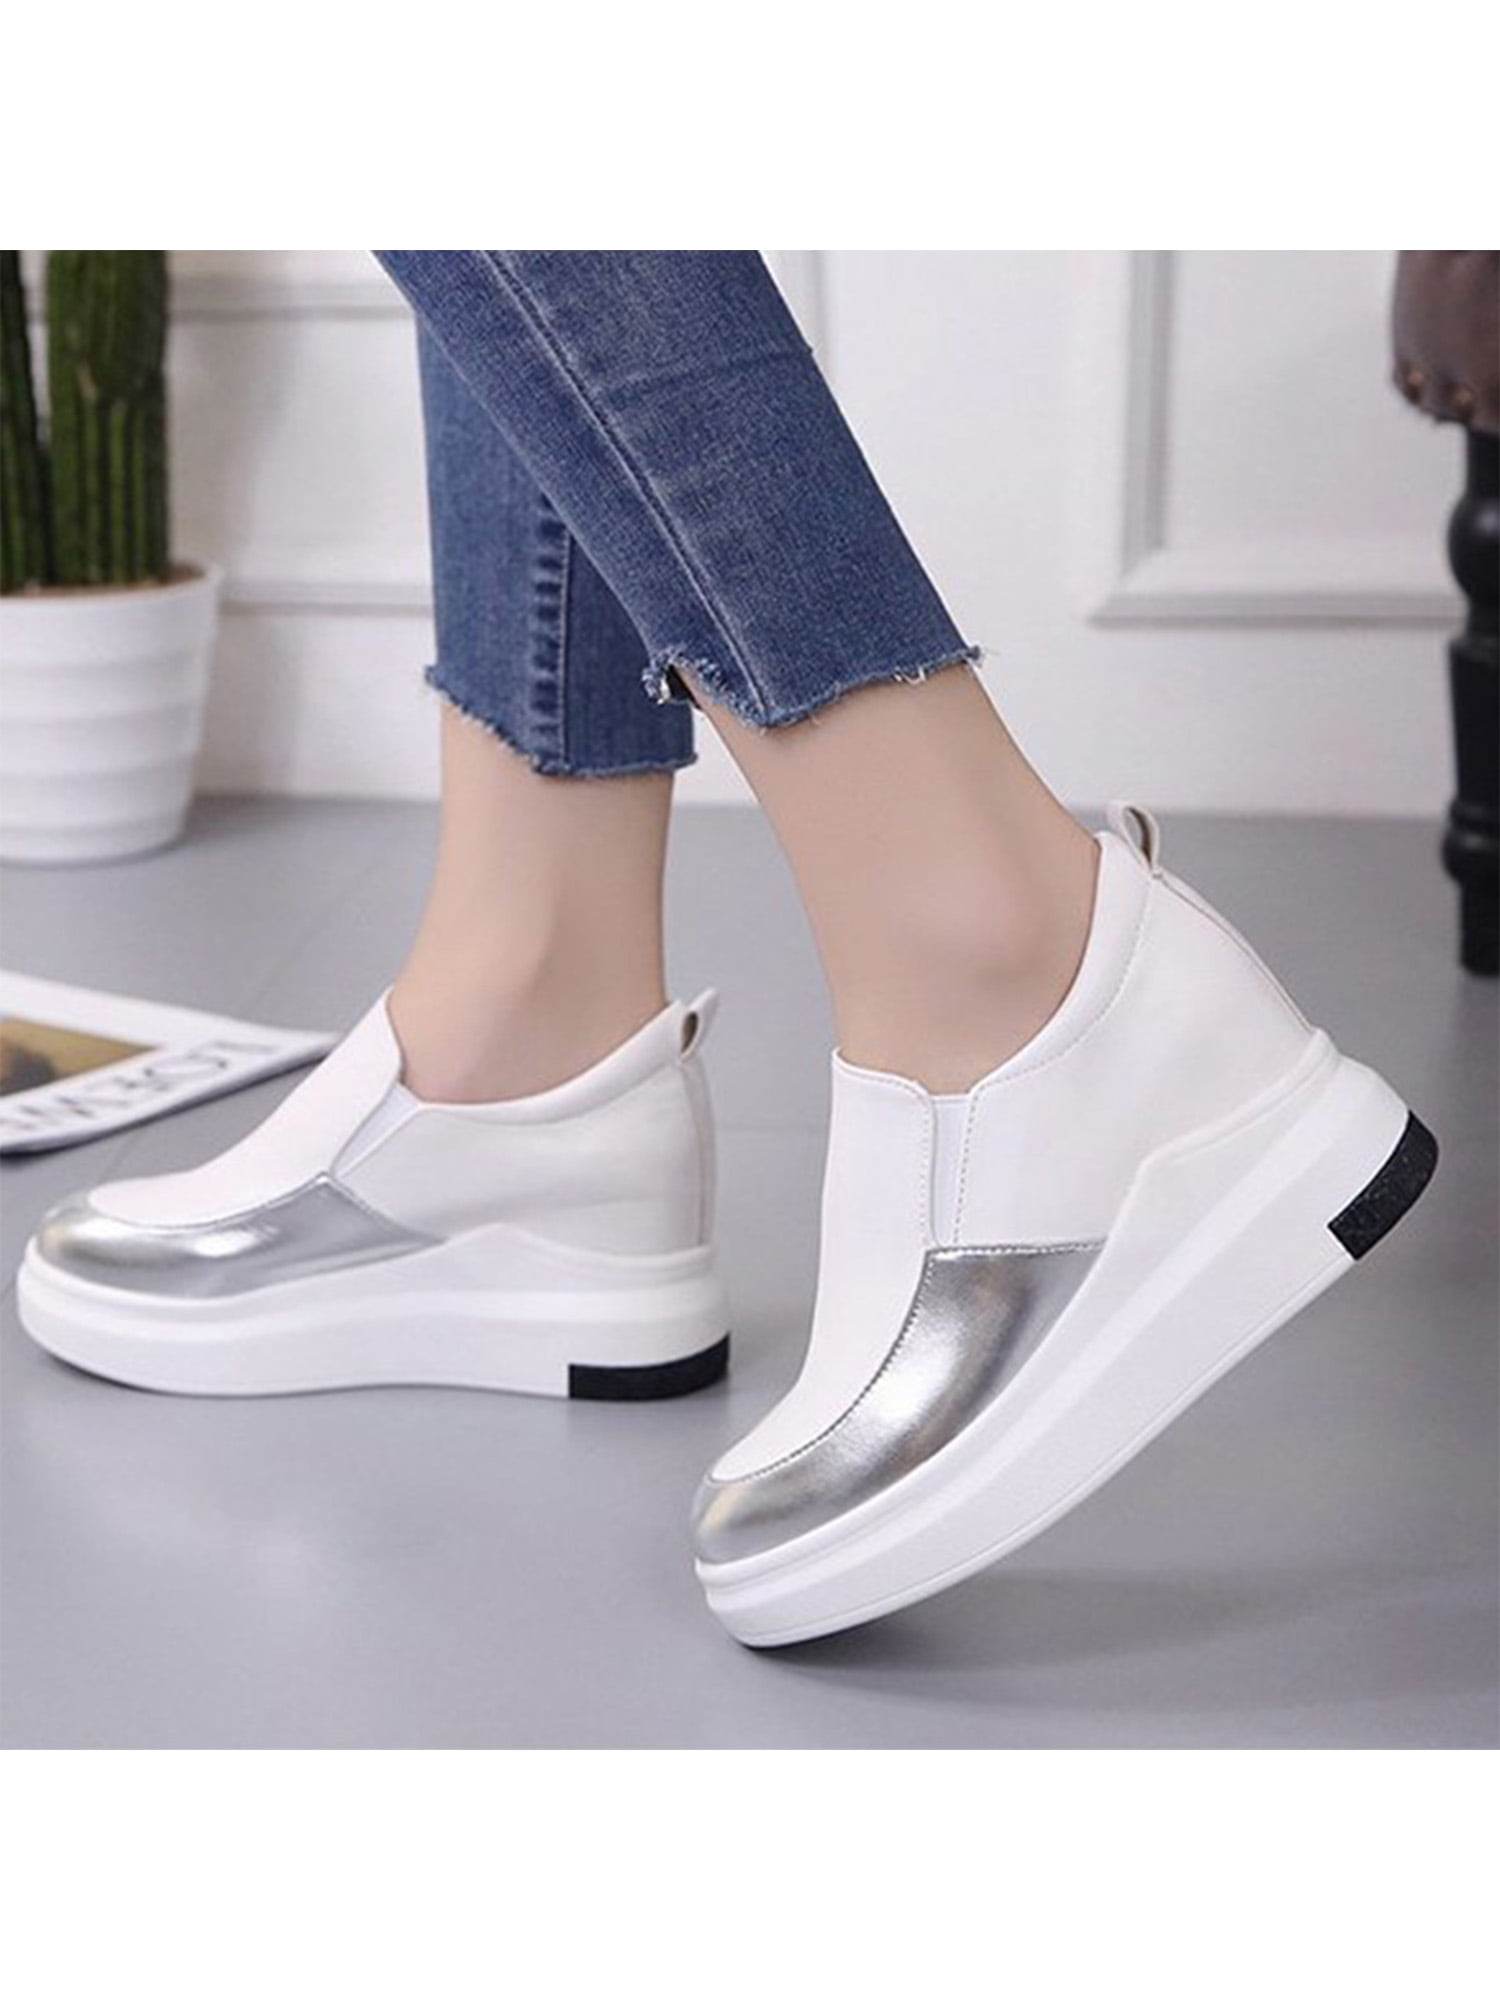 Womens Platform Hidden Wedge Loafers Sneakers Slip On High Heels Casual Shoes 